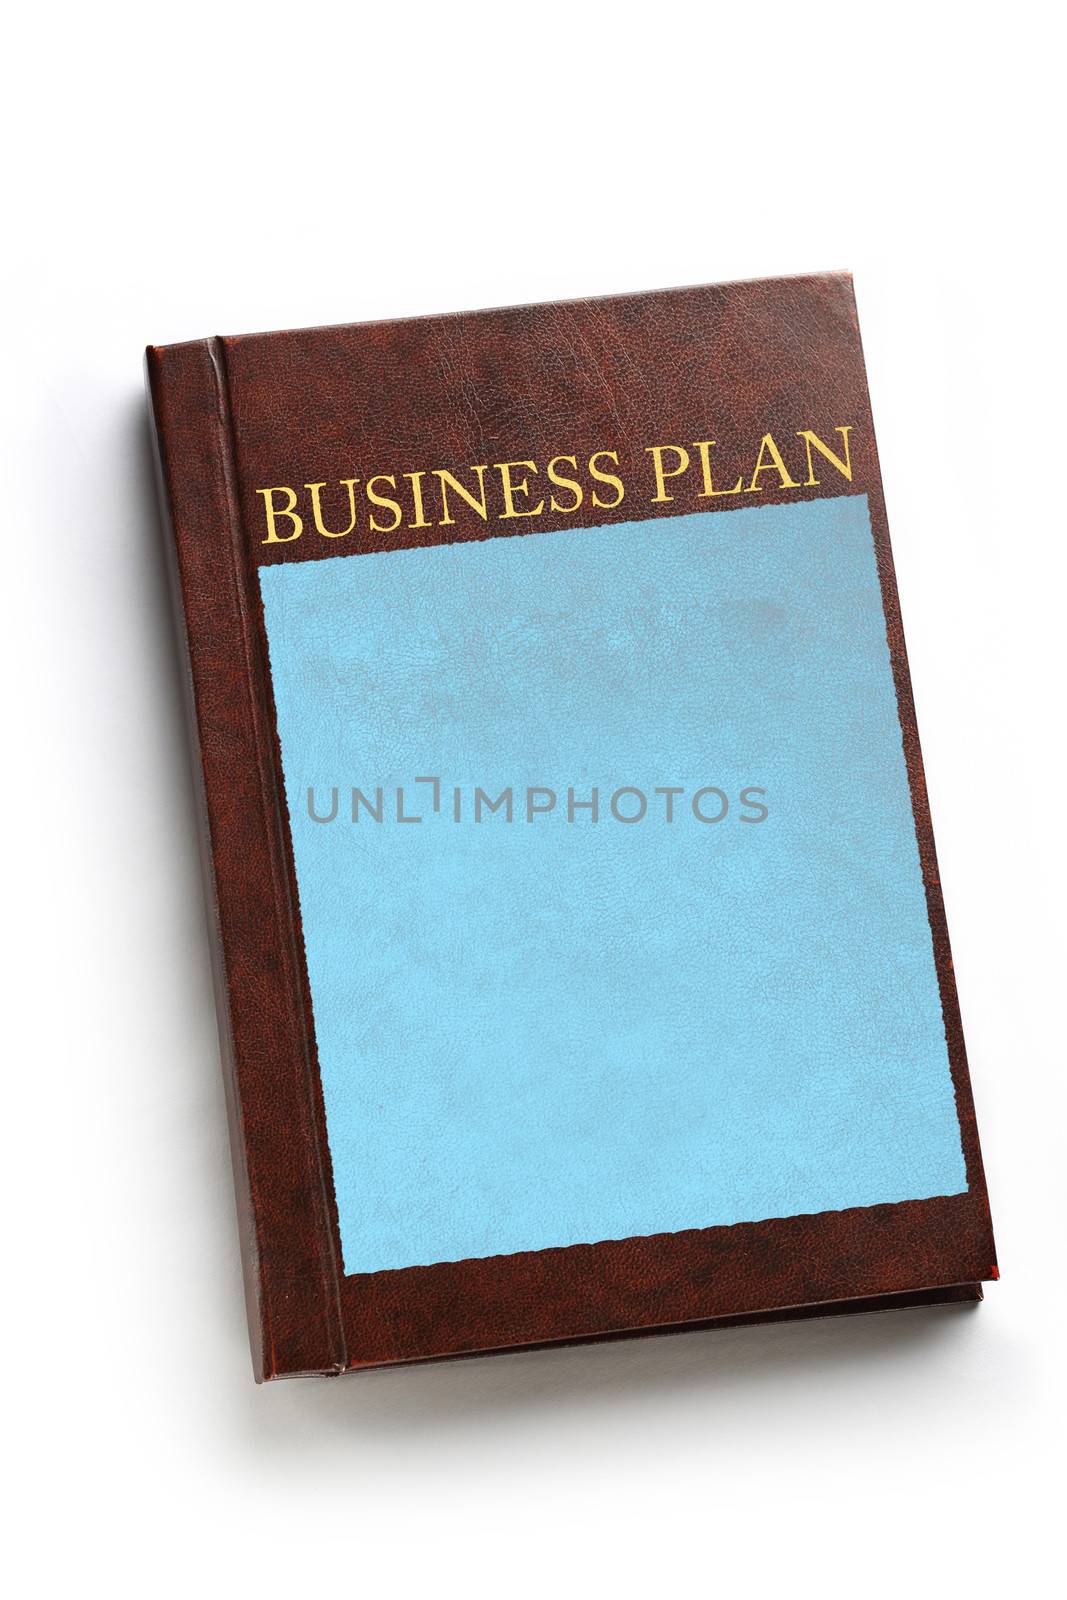 Business plan book on white by Garsya